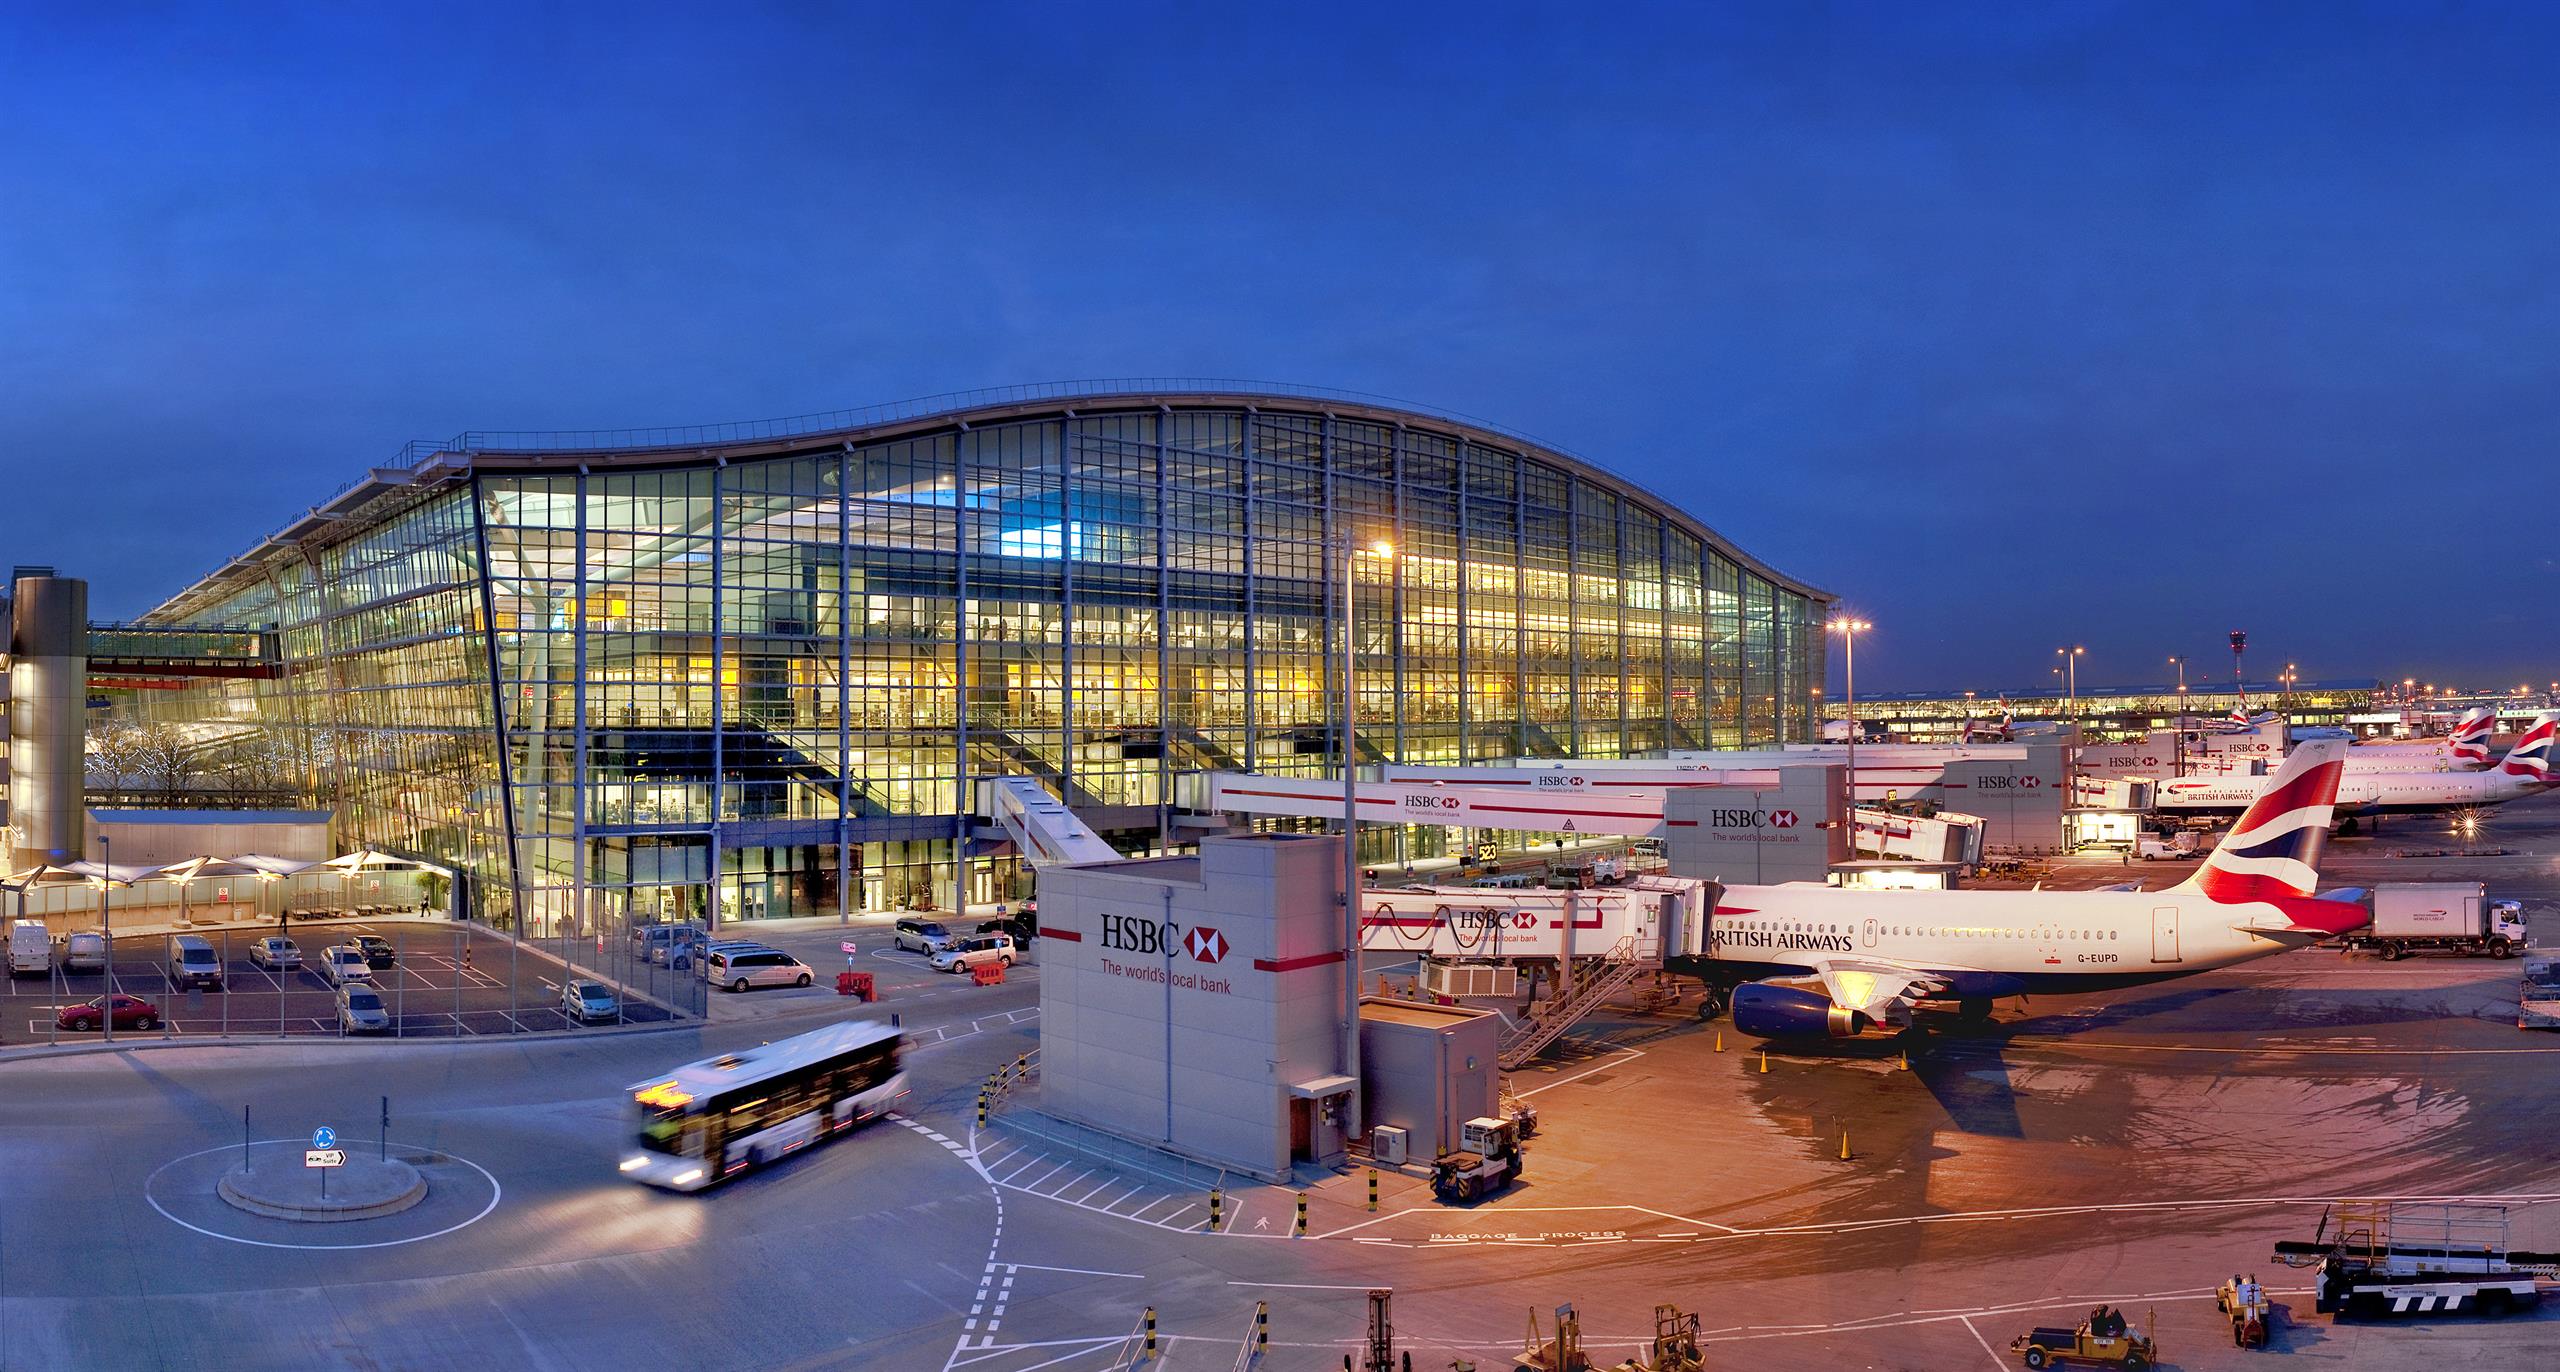 Huelga del personal de seguridad de la Terminal 5 - Huelgas de transporte en Londres - Foro Londres, Reino Unido e Irlanda